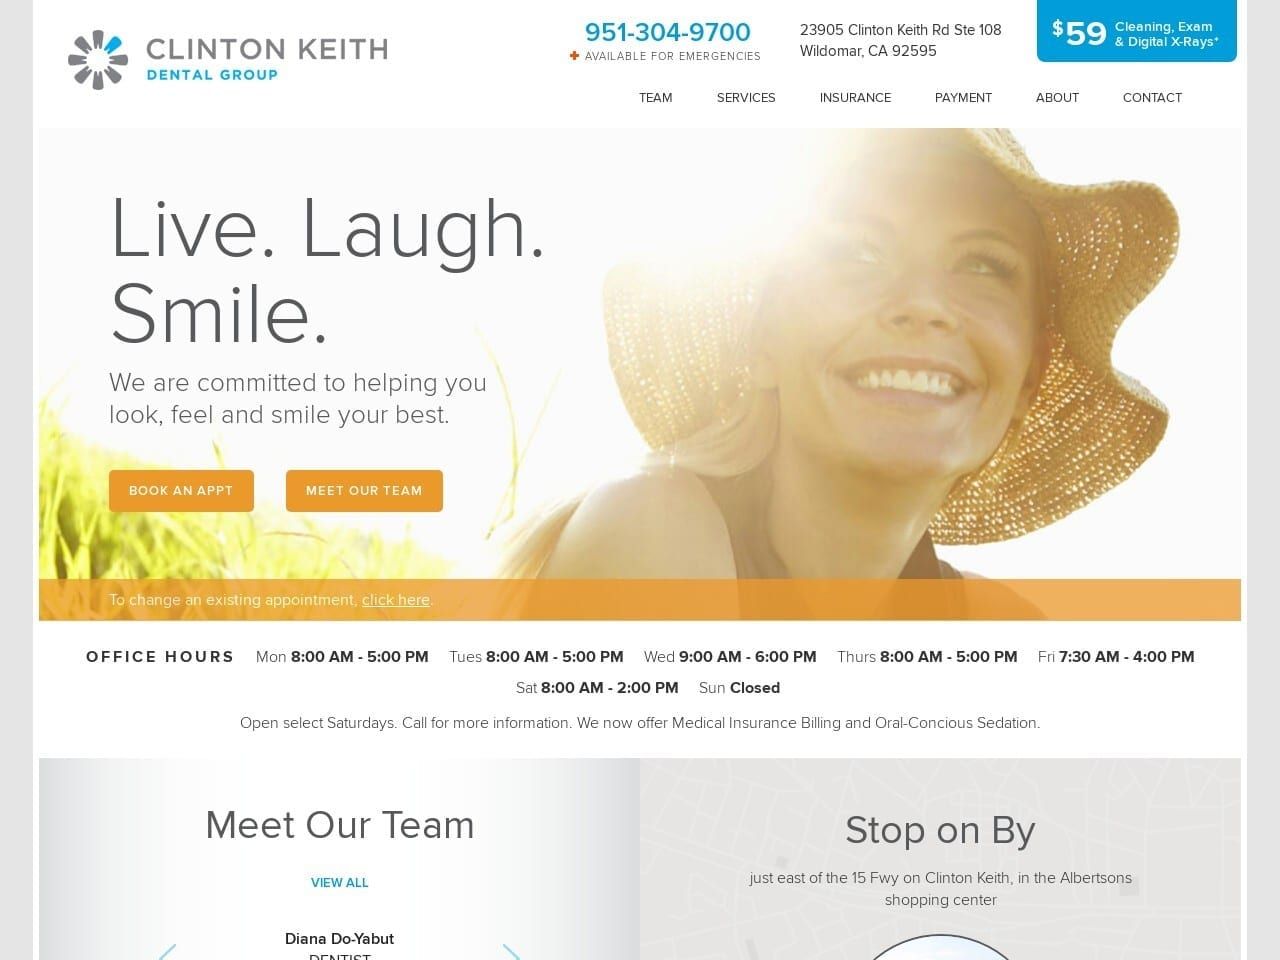 Clinton Keith Dental Group Website Screenshot from clintonkeithdental.com